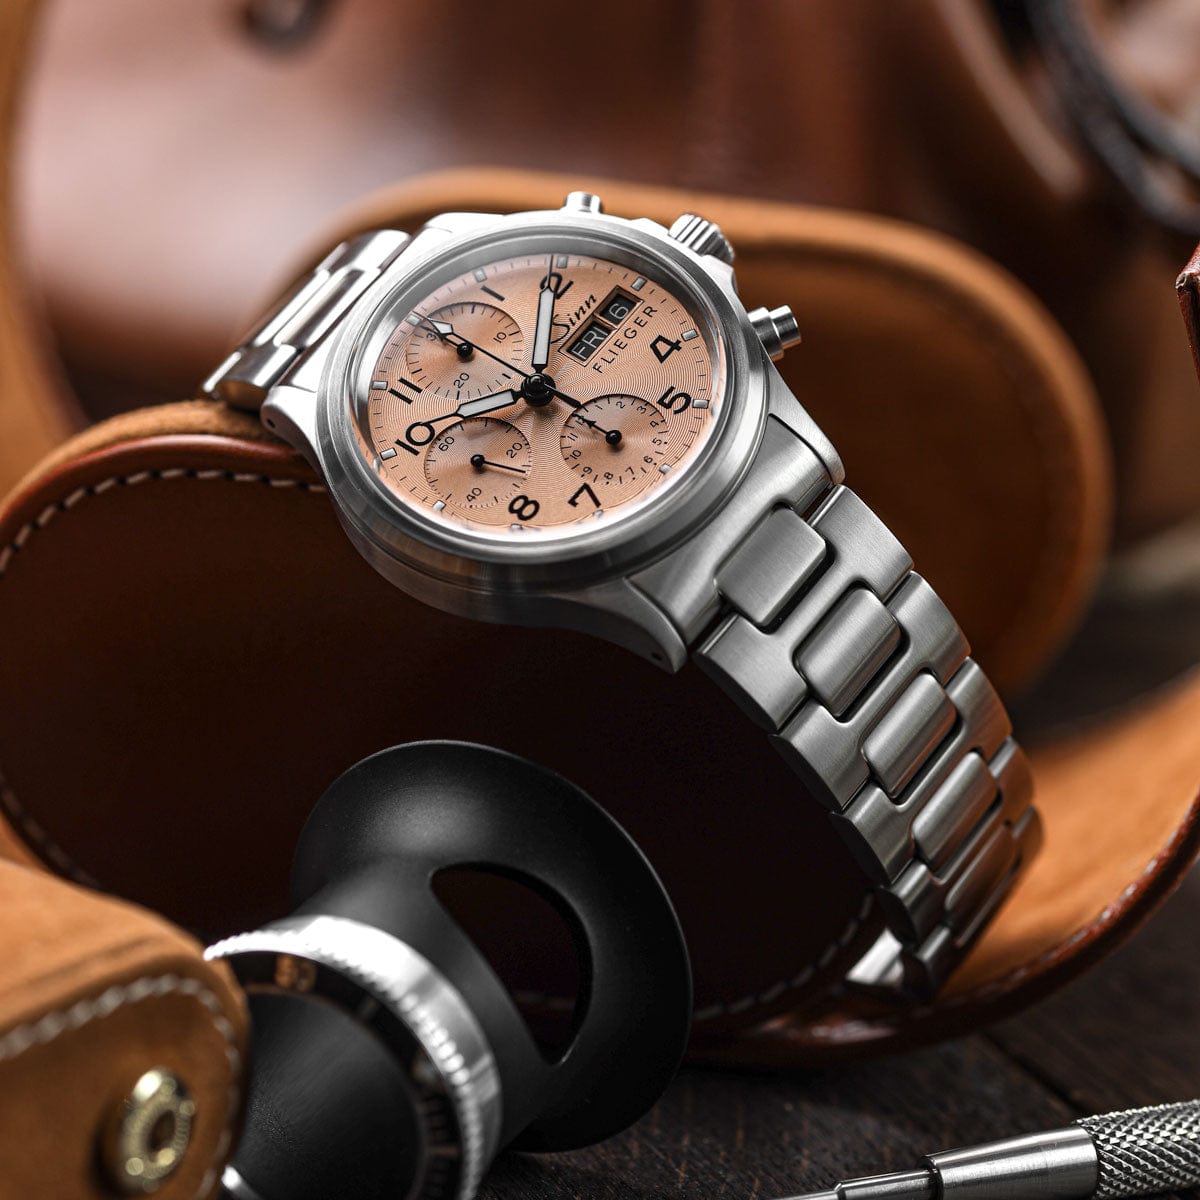 Sinn 356 Sa Pilot II Automatic Chronograph Watch - Salmon Dial - Solid Bracelet